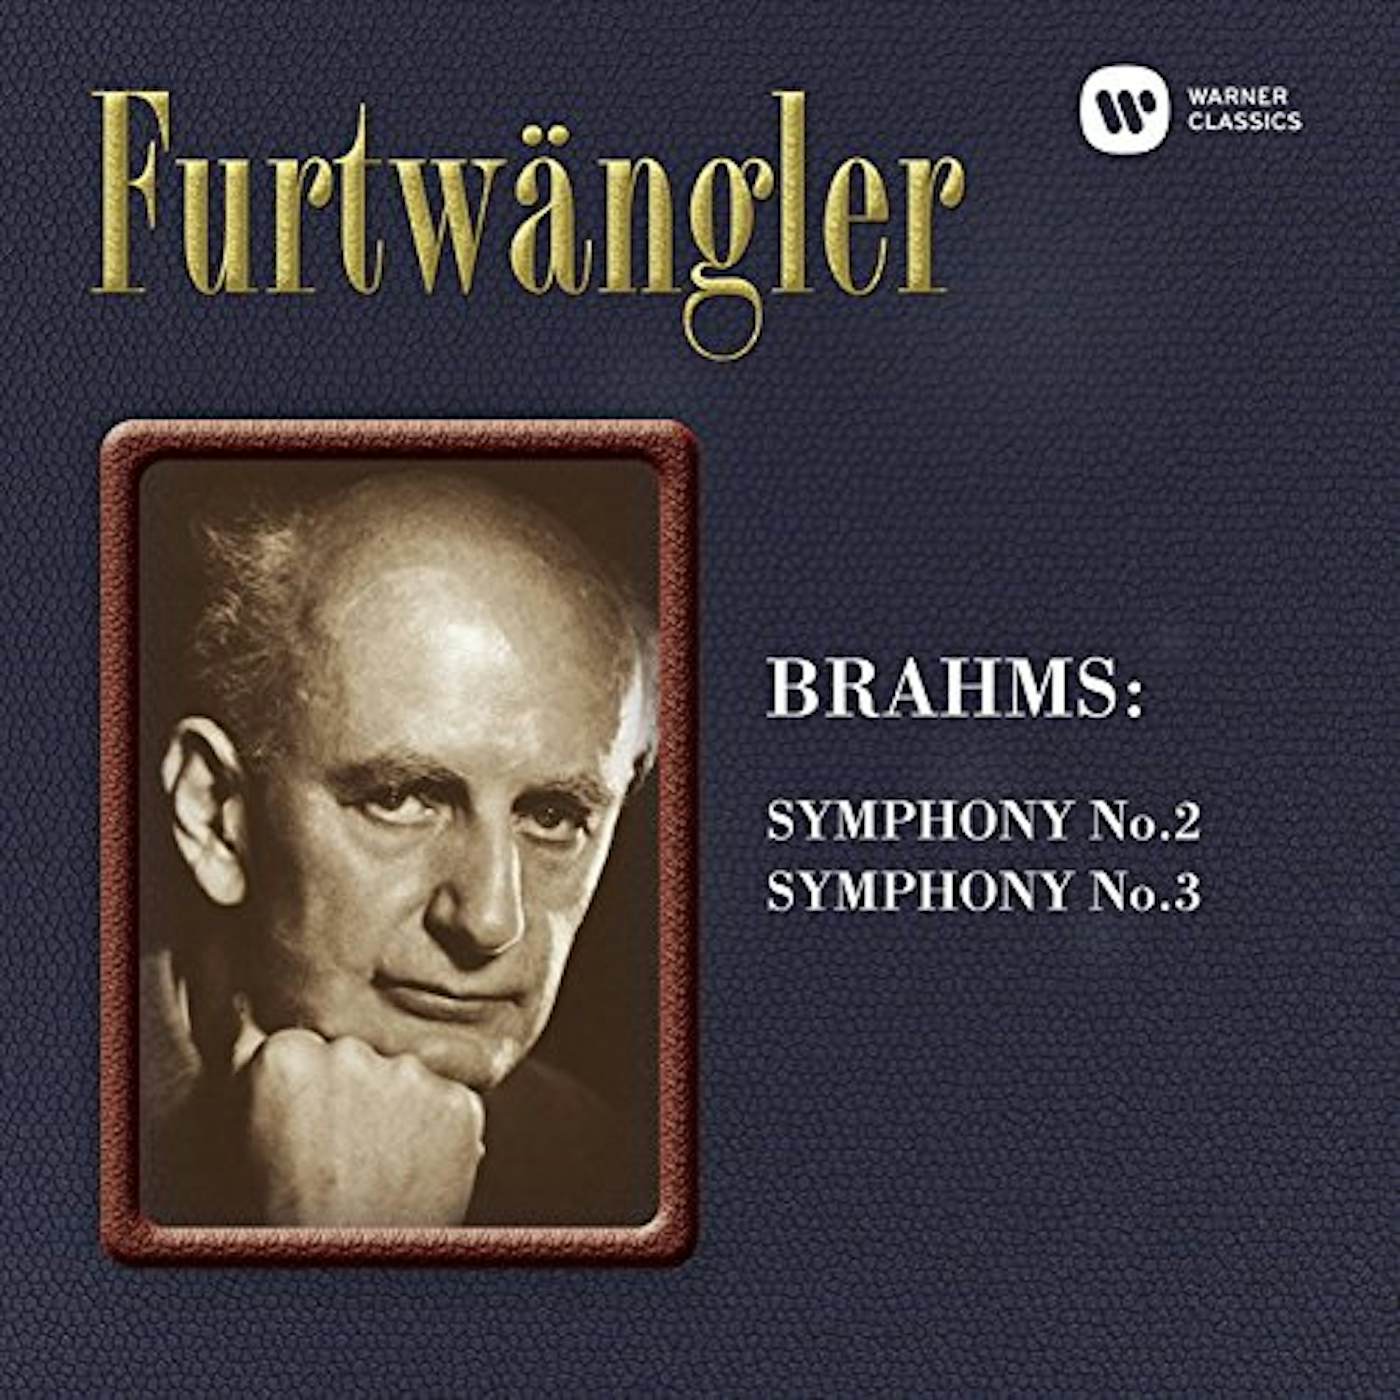 Wilhelm Furtwängler BRAHMS: SYMPHONY NO.2 & 3 CD Super Audio CD